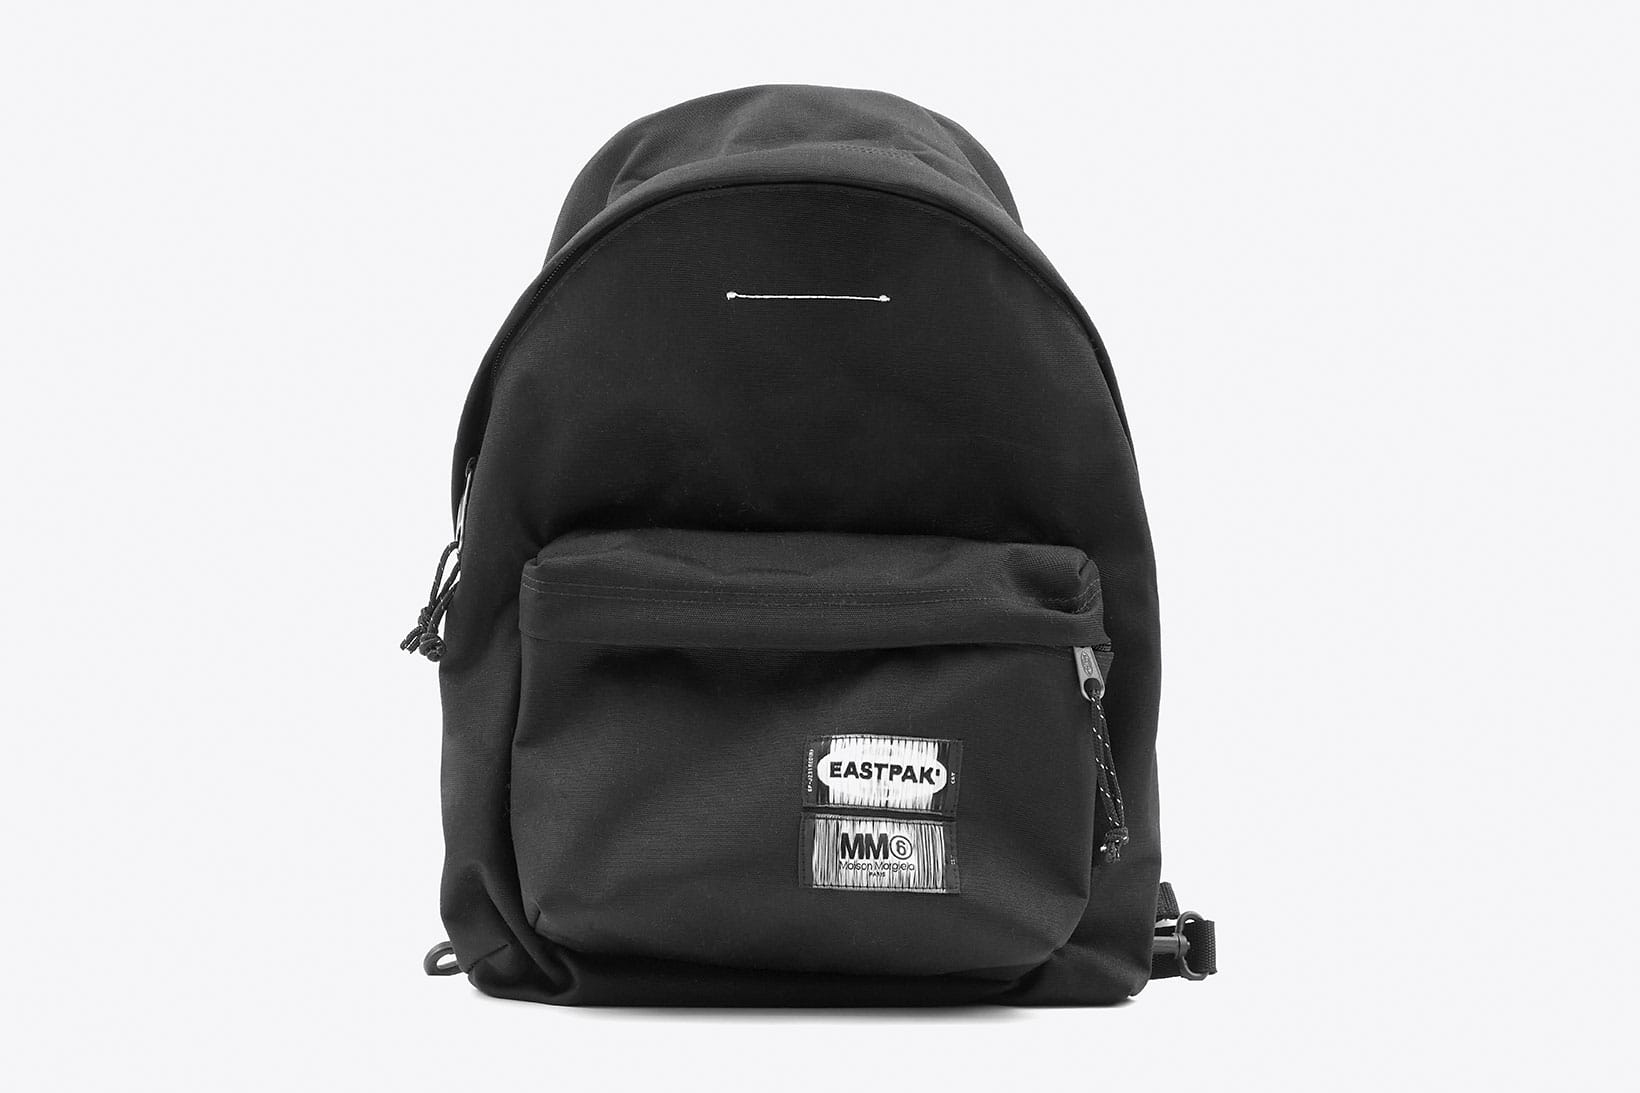 MM6 Maison Margiela x Eastpak FW21 Bags Collab | IicfShops